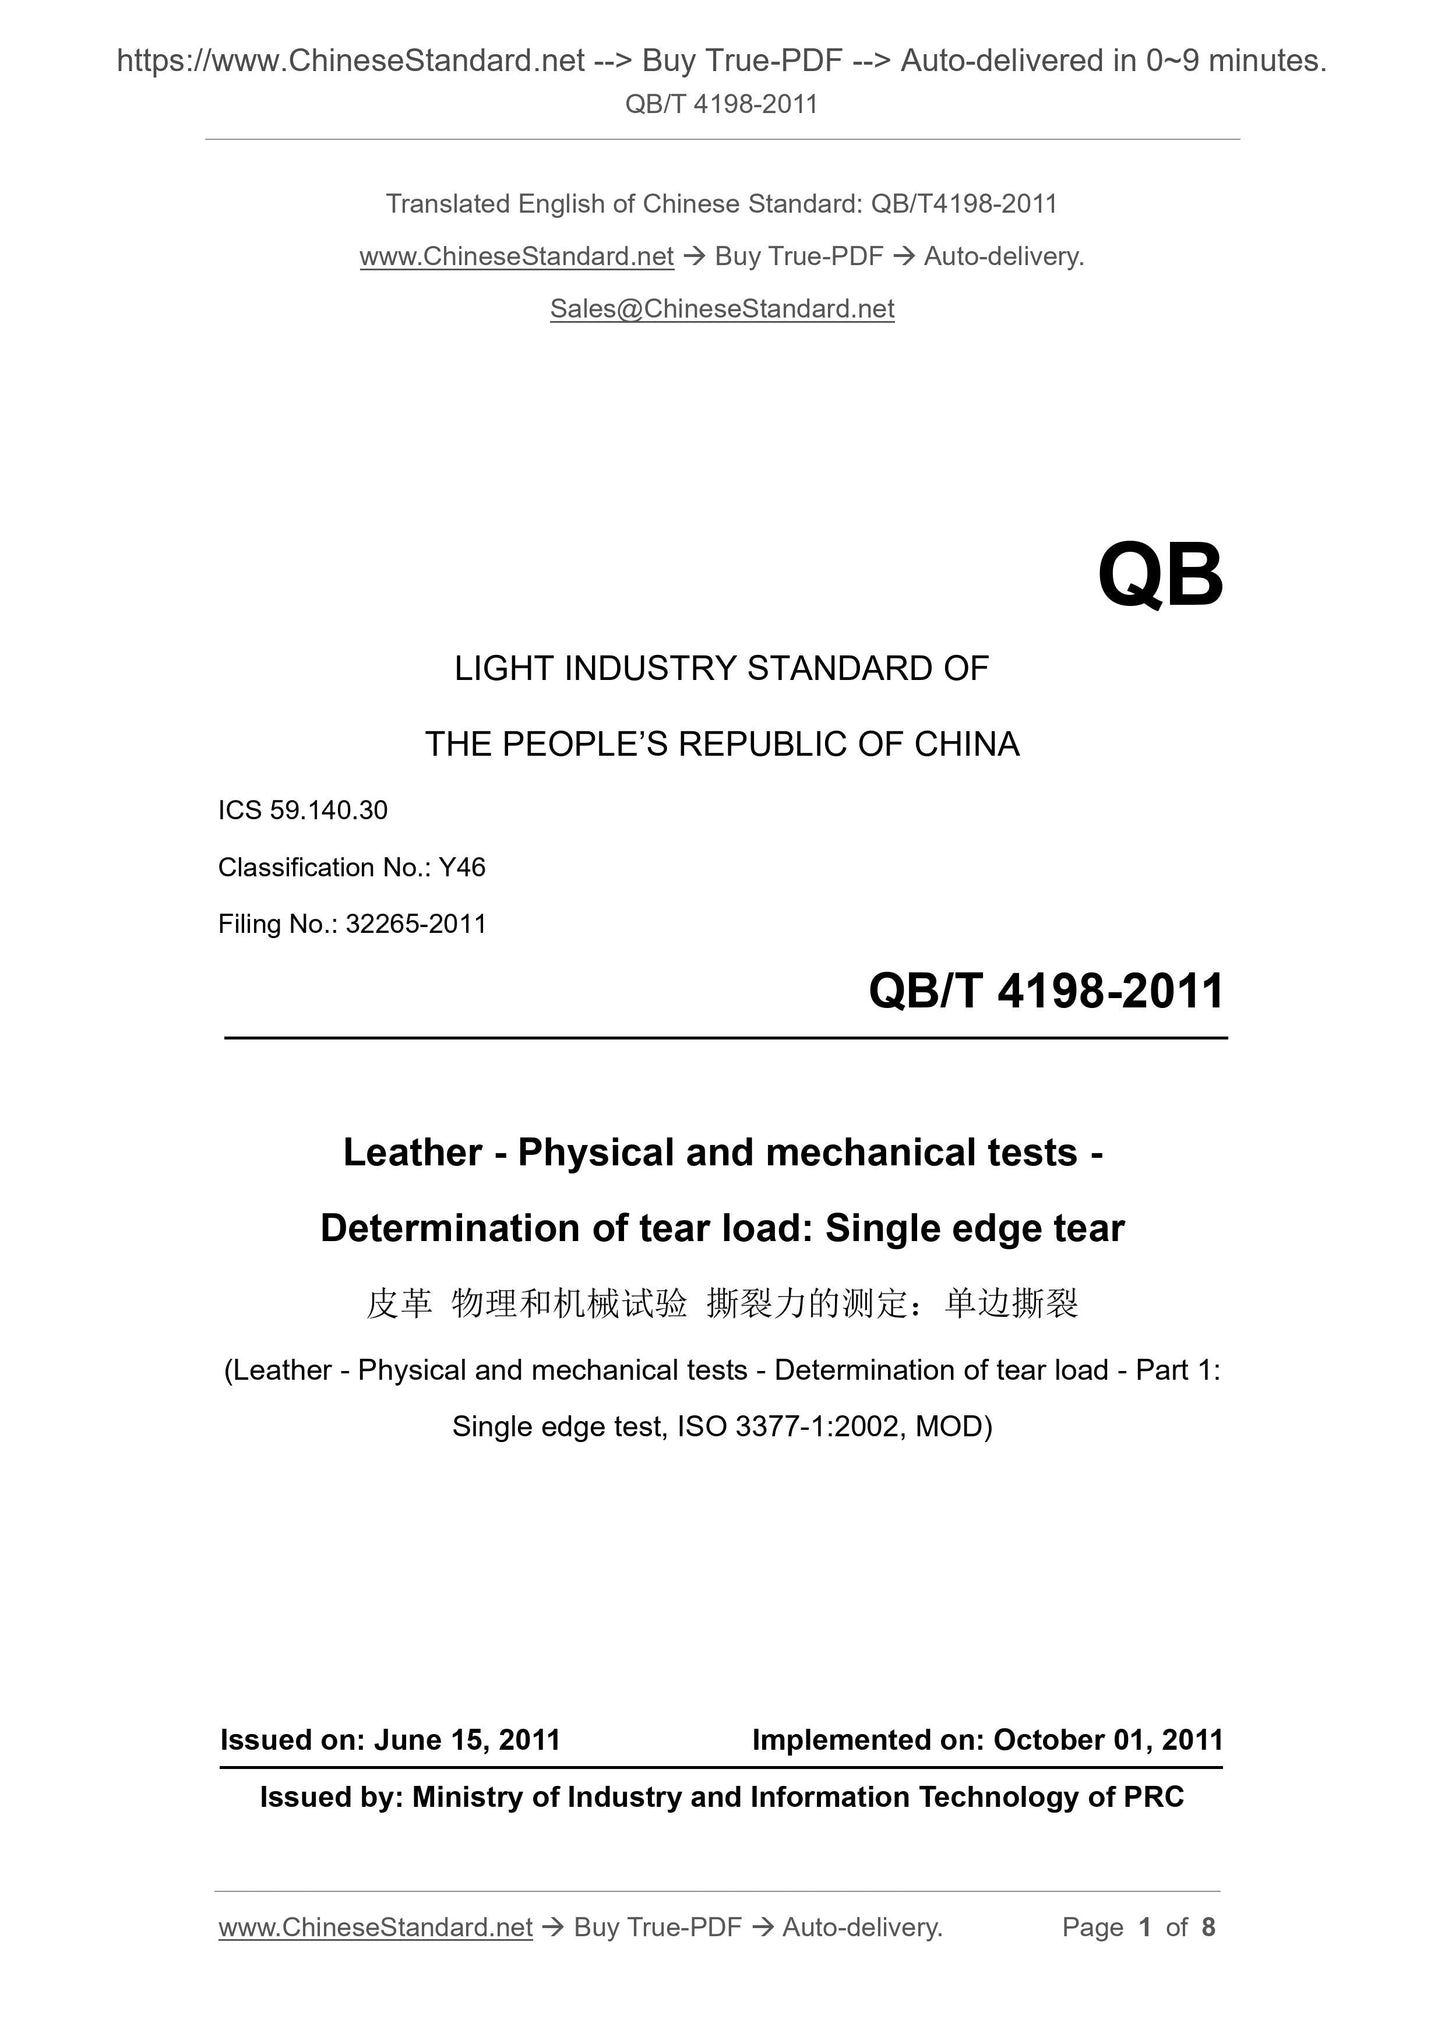 QB/T 4198-2011 Page 1